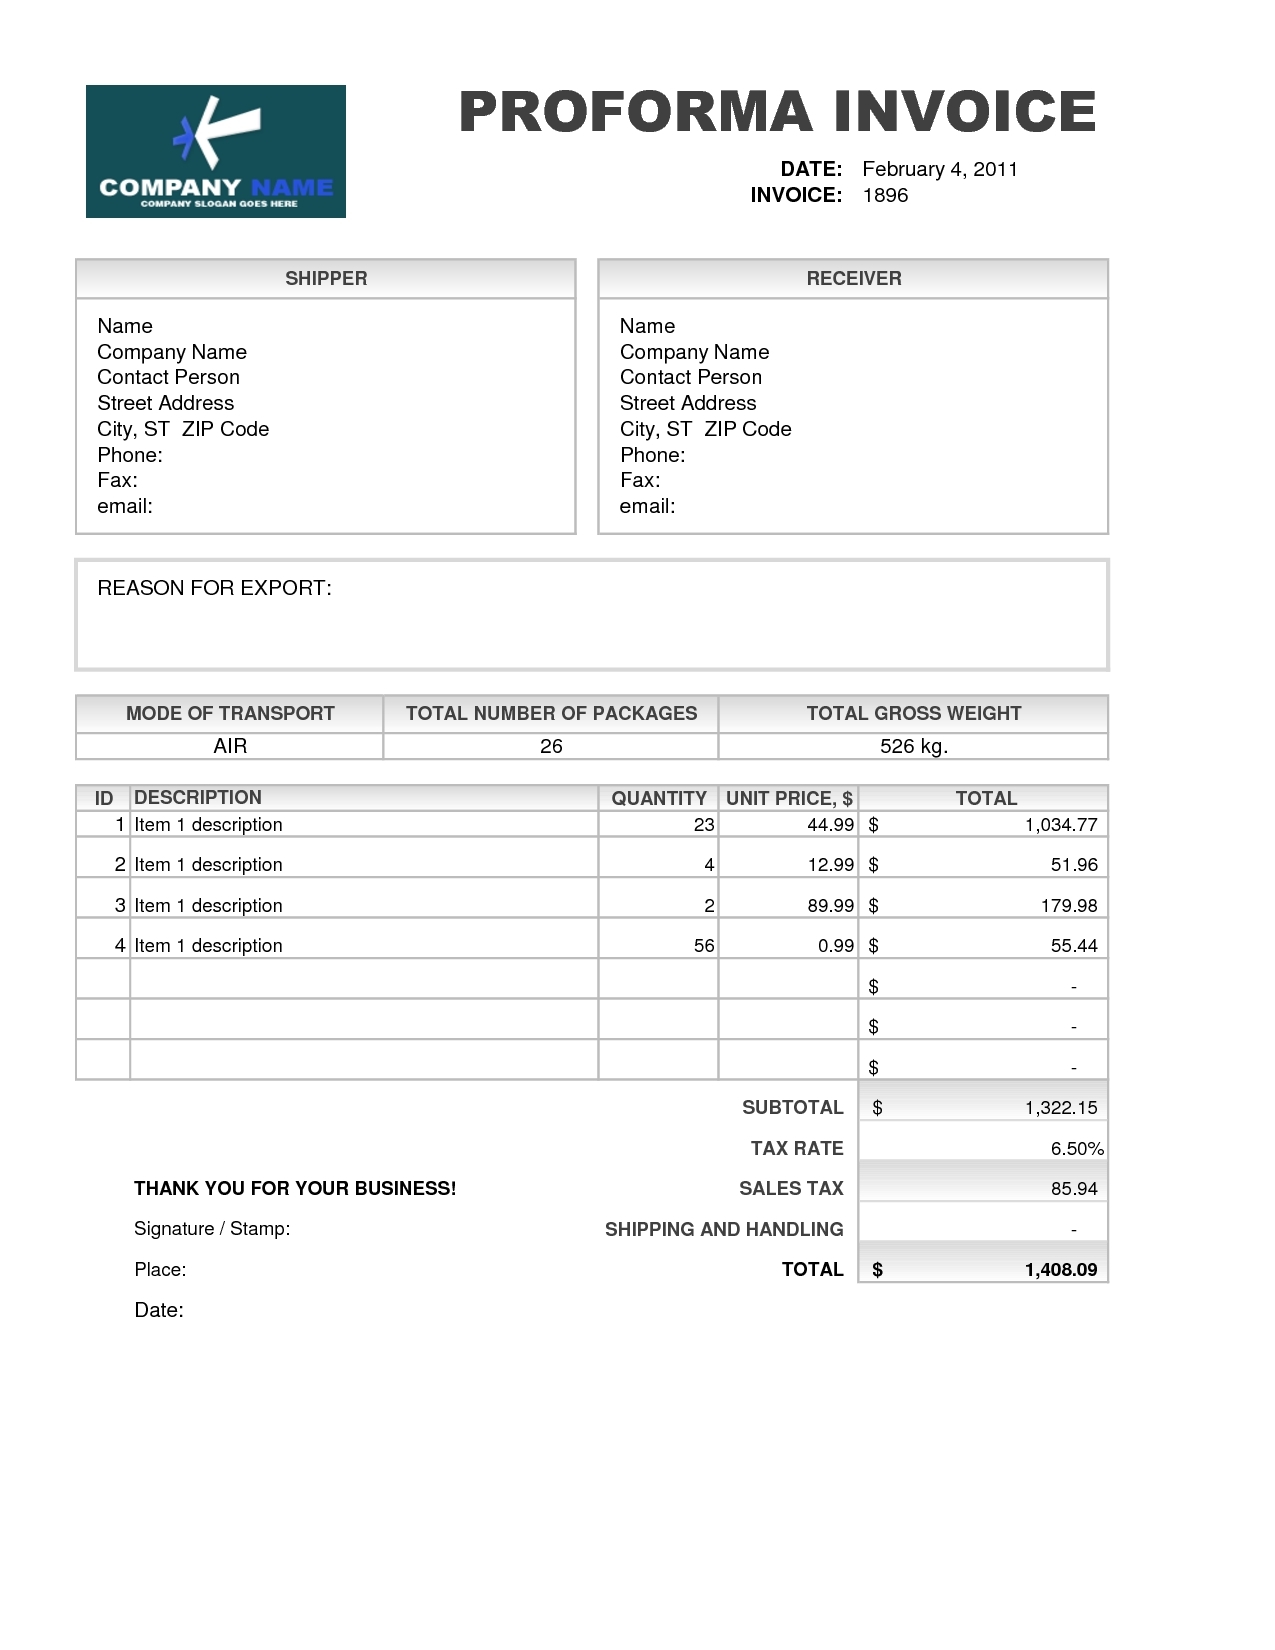 proforma invoice sample sample of proforma invoice for export invoice template free 2016 1275 X 1650